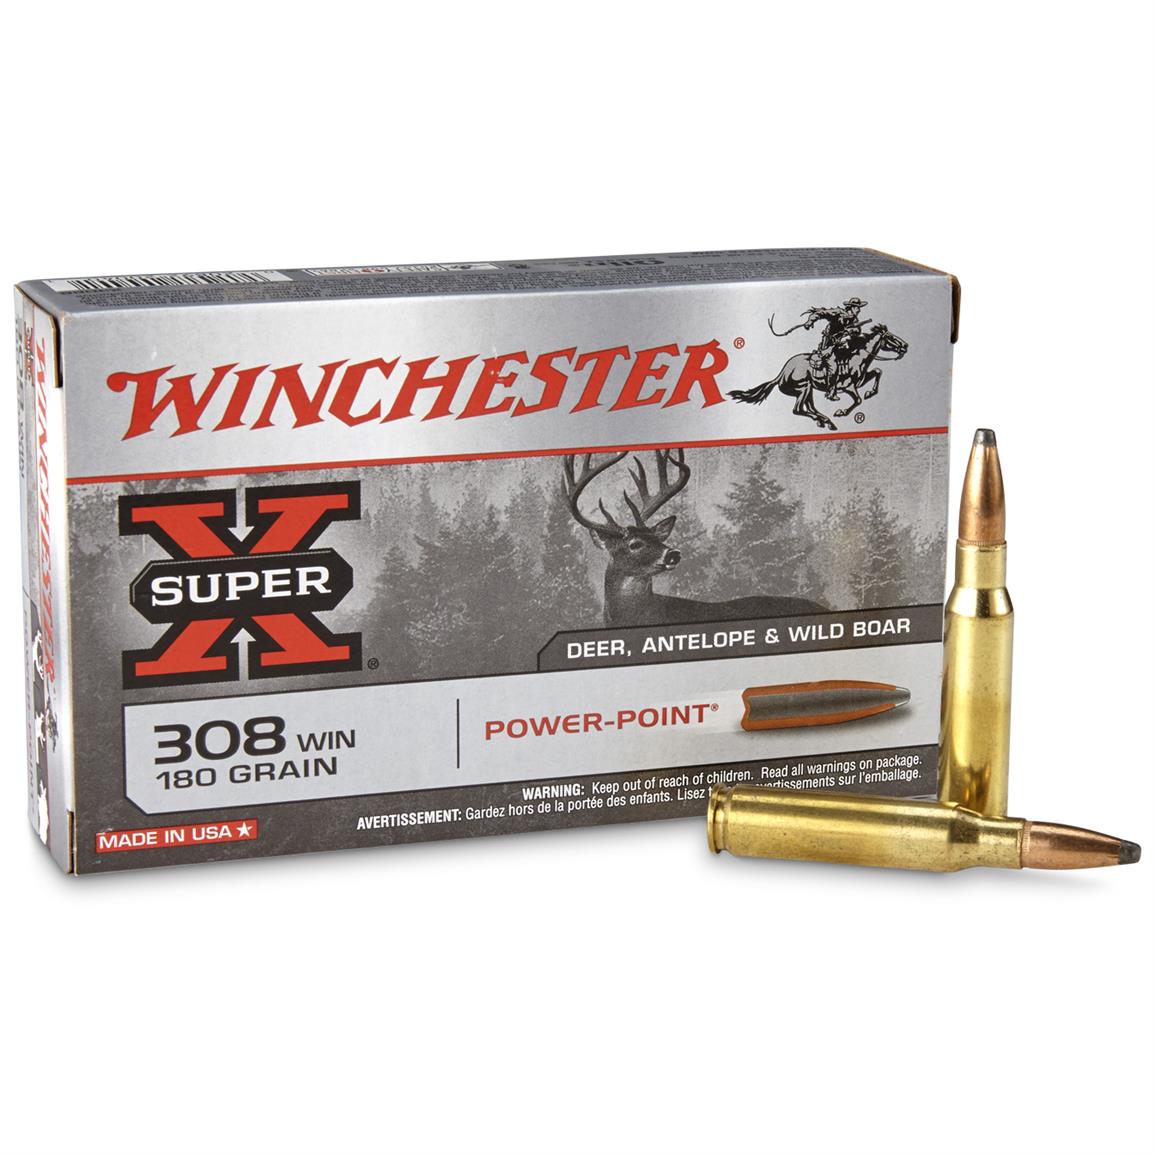 Winchester Super-X, .308 Winchester, PP, 180 Grain, 20 Rounds